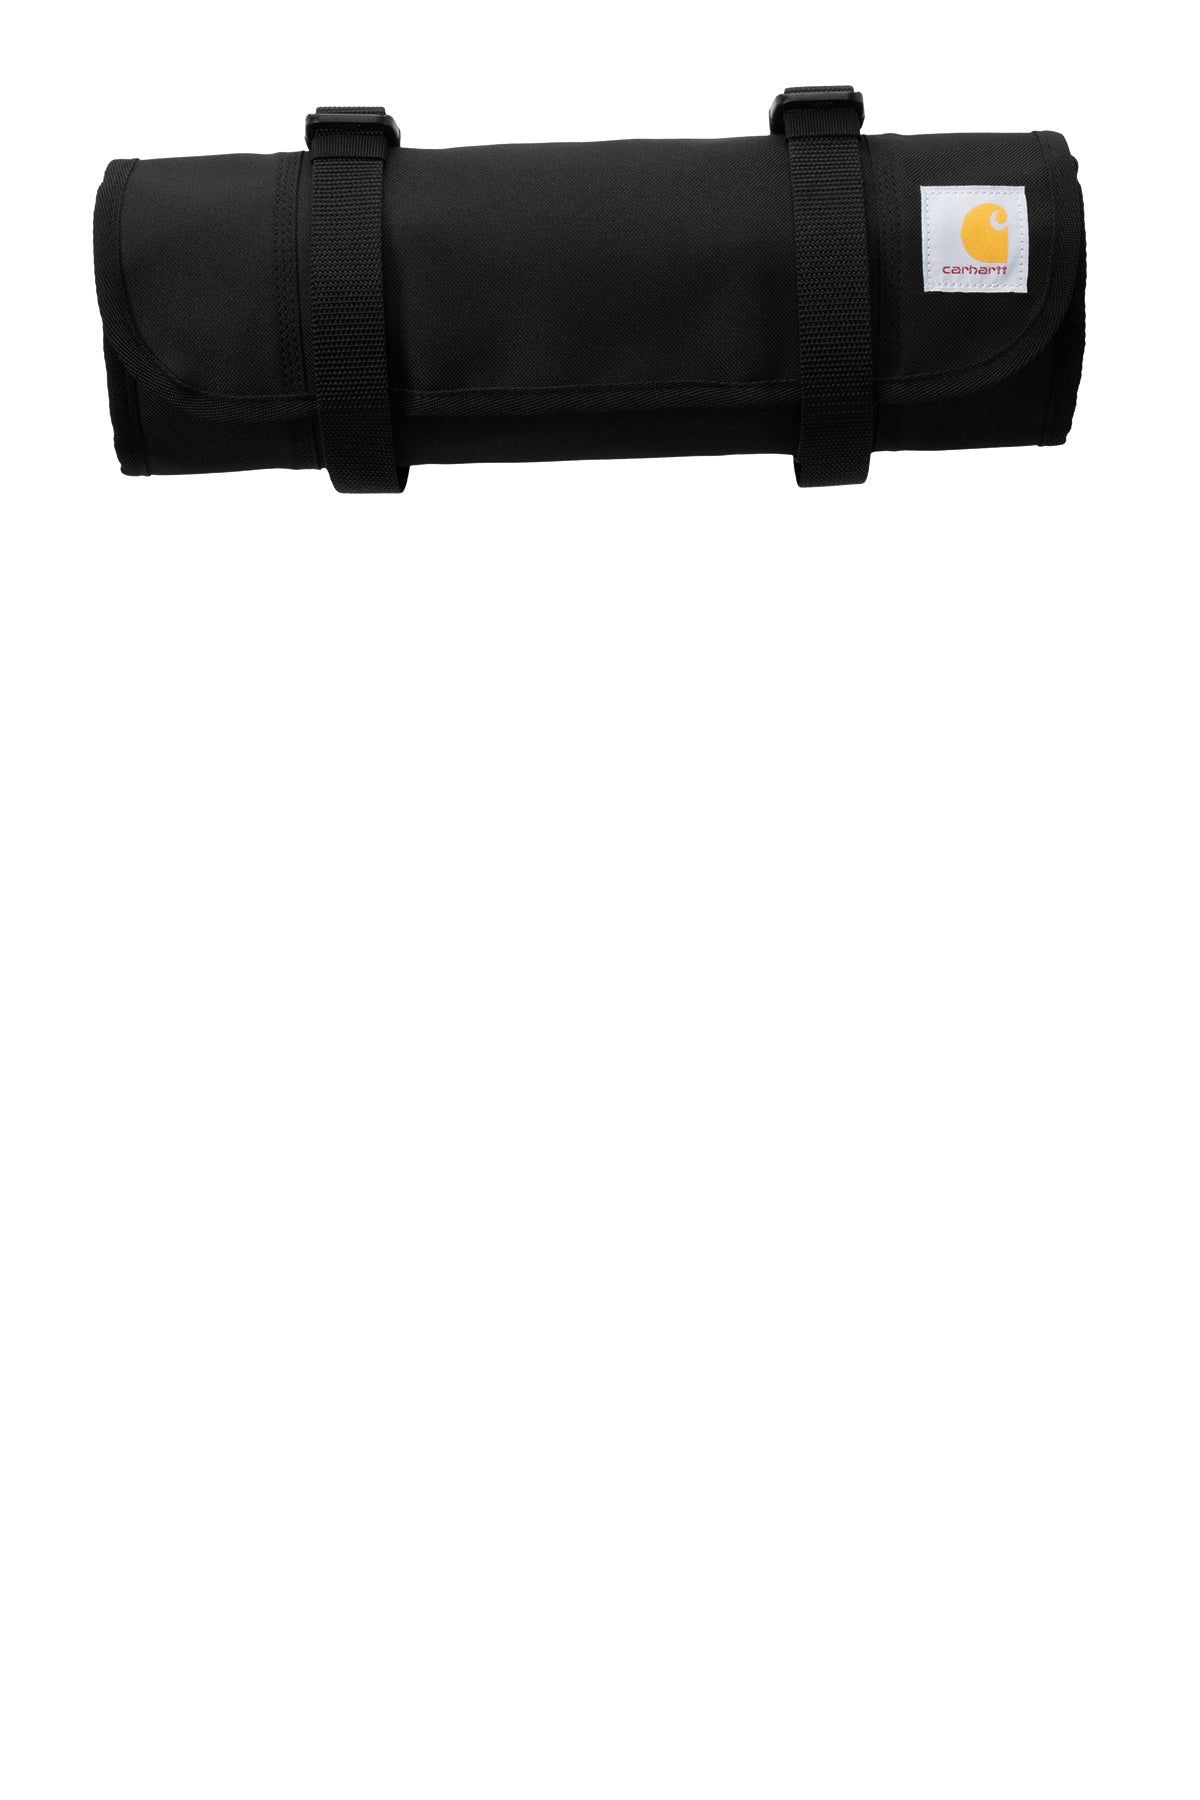 Carhartt 18-Pocket Custom Utility Rolls, Black